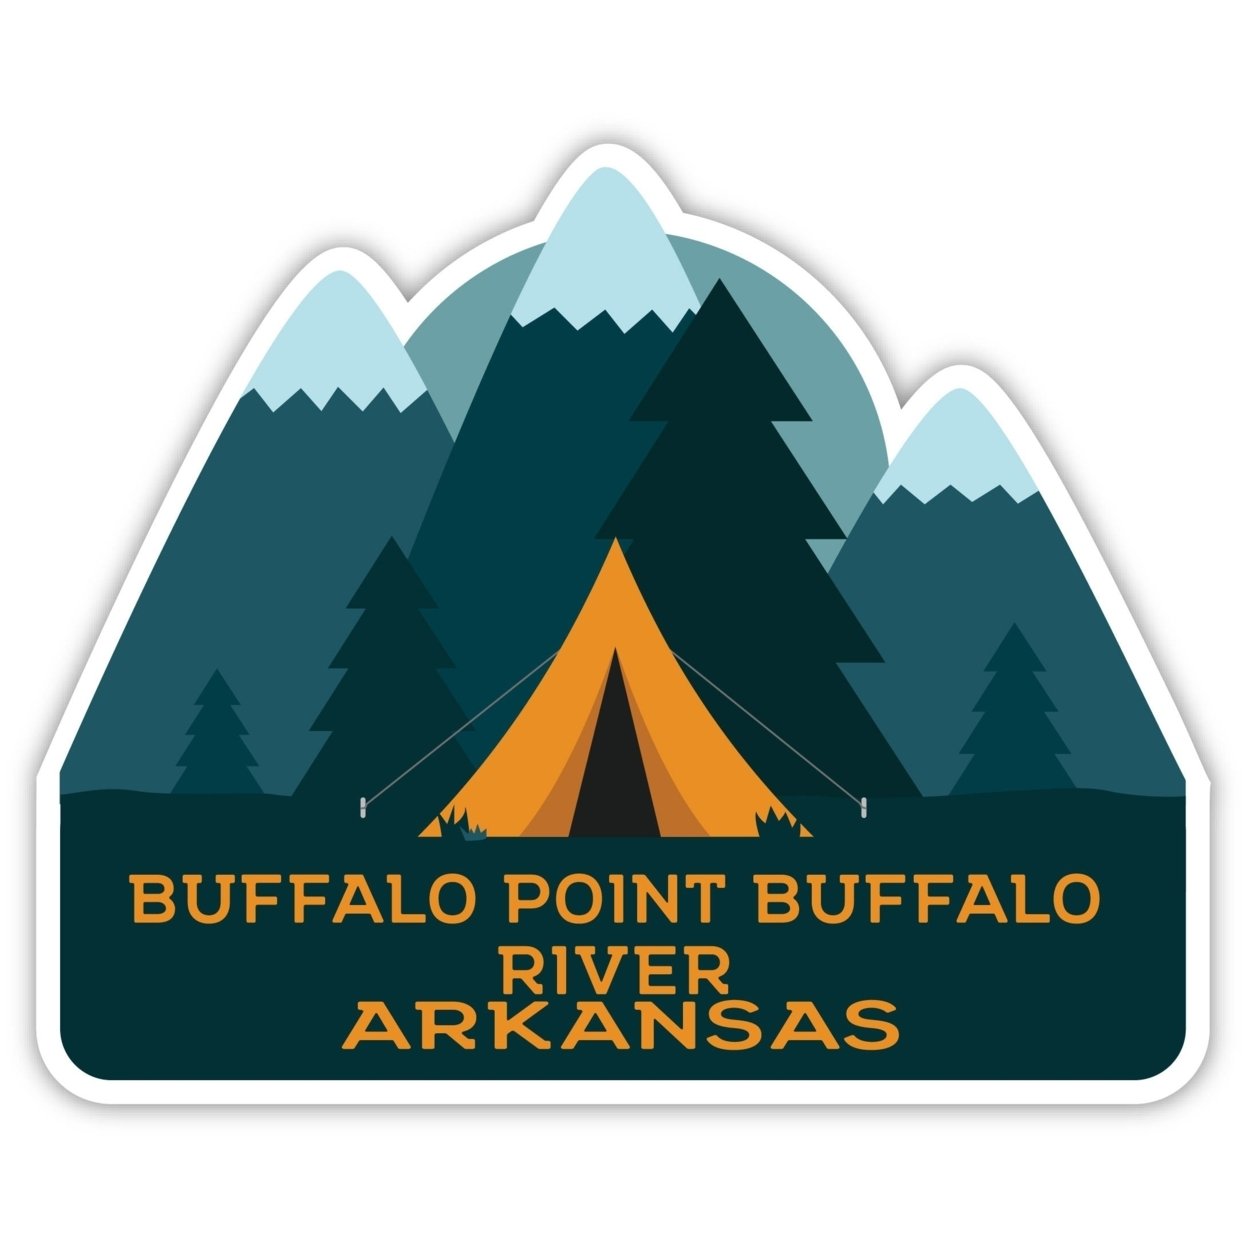 Buffalo Point Buffalo River Arkansas Souvenir Decorative Stickers (Choose Theme And Size) - Single Unit, 8-Inch, Tent